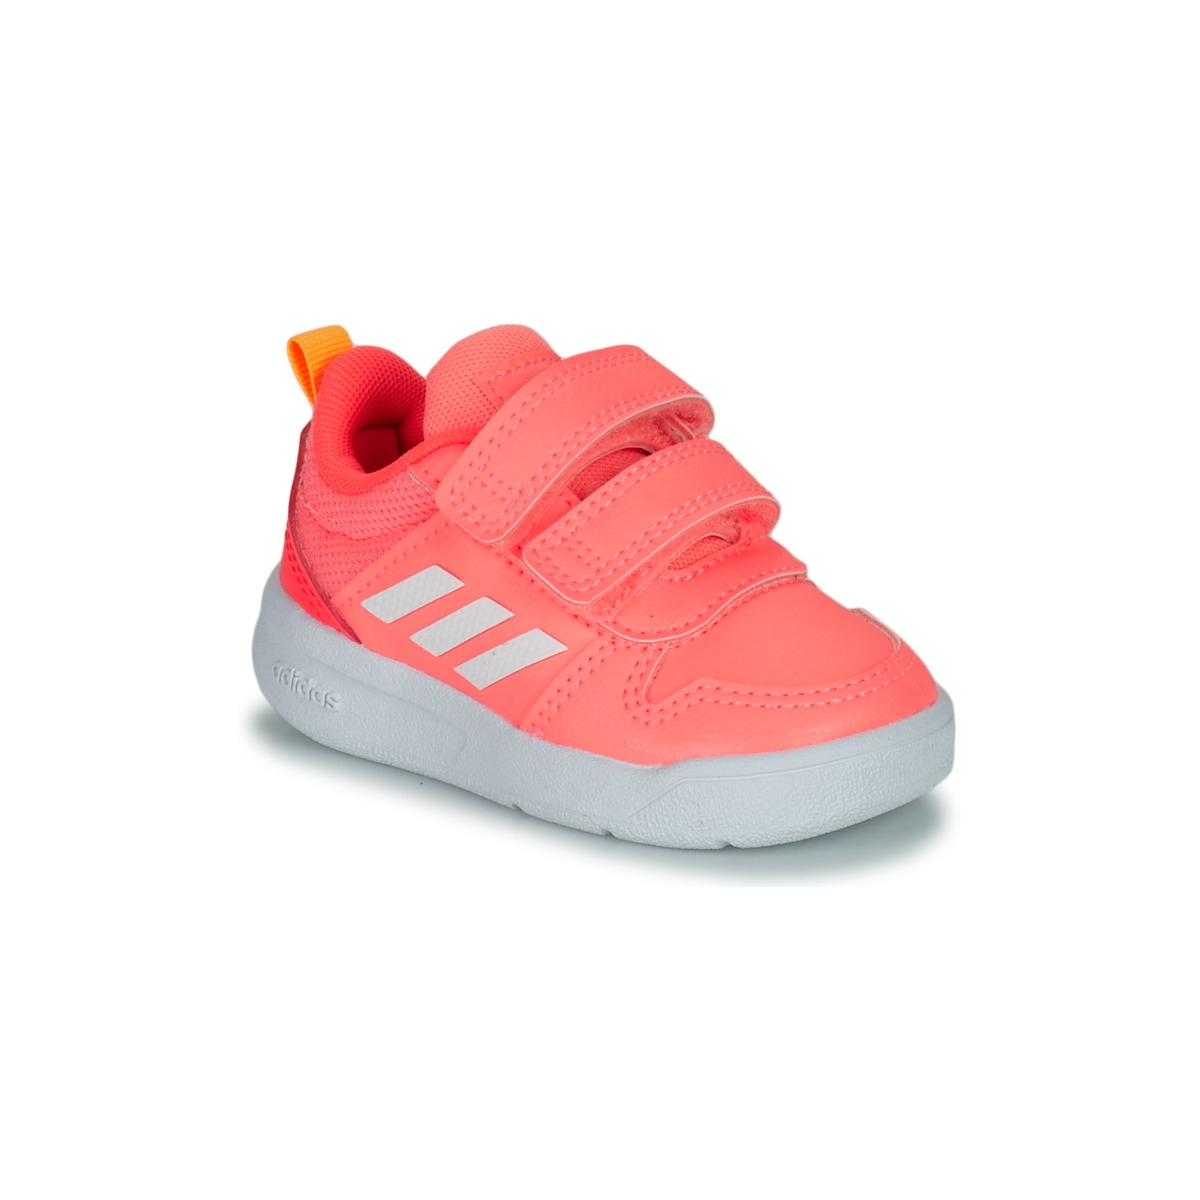 Sko Pige Lave sneakers adidas Performance TENSAUR I Pink